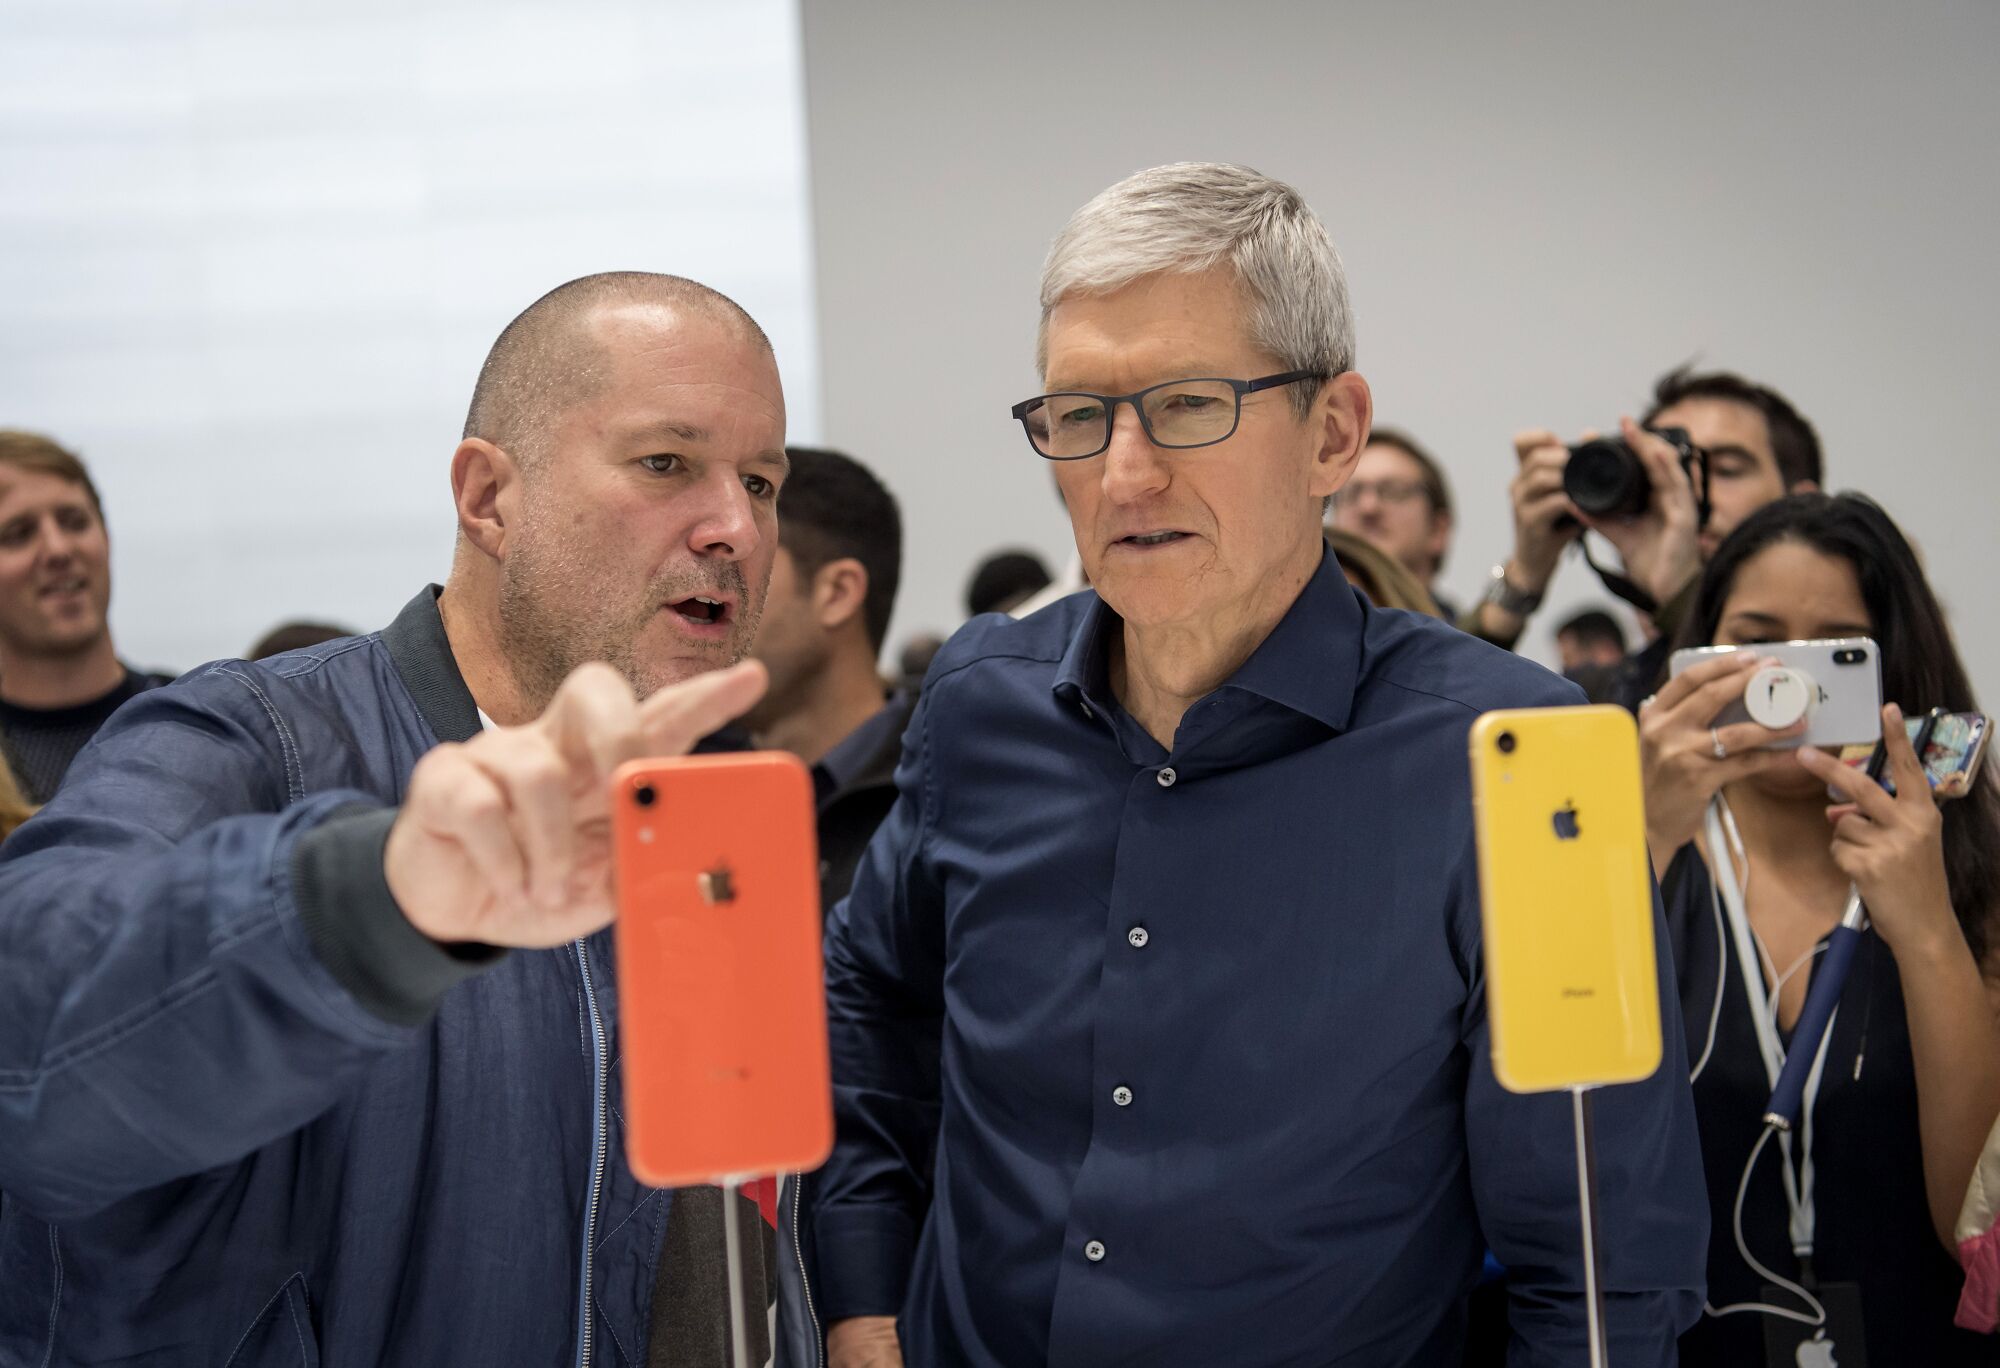 apple loses another top designer, extending post-jony ive exodus